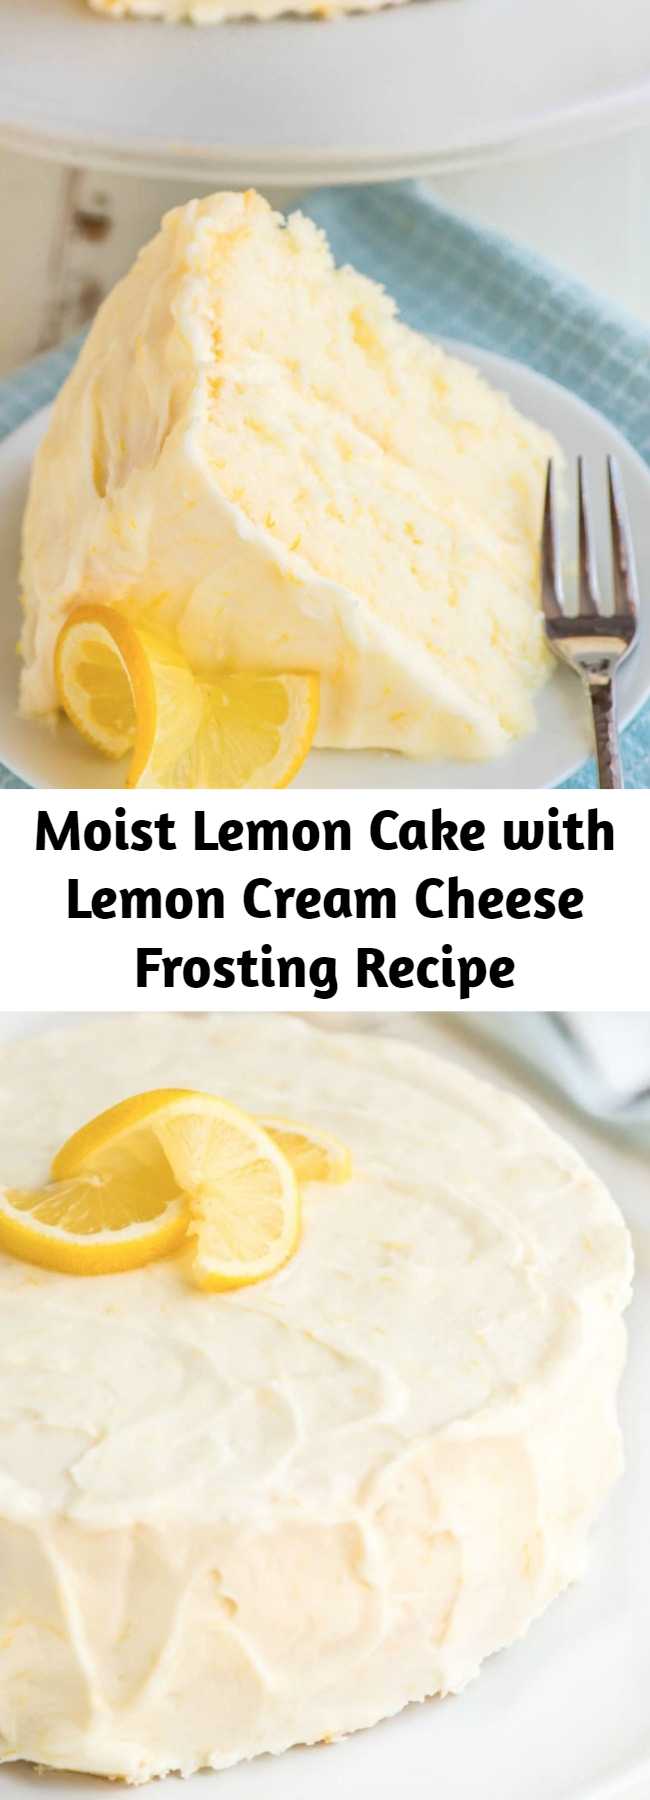 Moist Lemon Cake with Lemon Cream Cheese Frosting Recipe - Supremely moist and fluffy lemon layer cake with homemade lemon cream cheese frosting. Every bite bursts with fresh lemon flavor! The perfect cake for any occasion. #cake #birthdaycake #recipe #baking